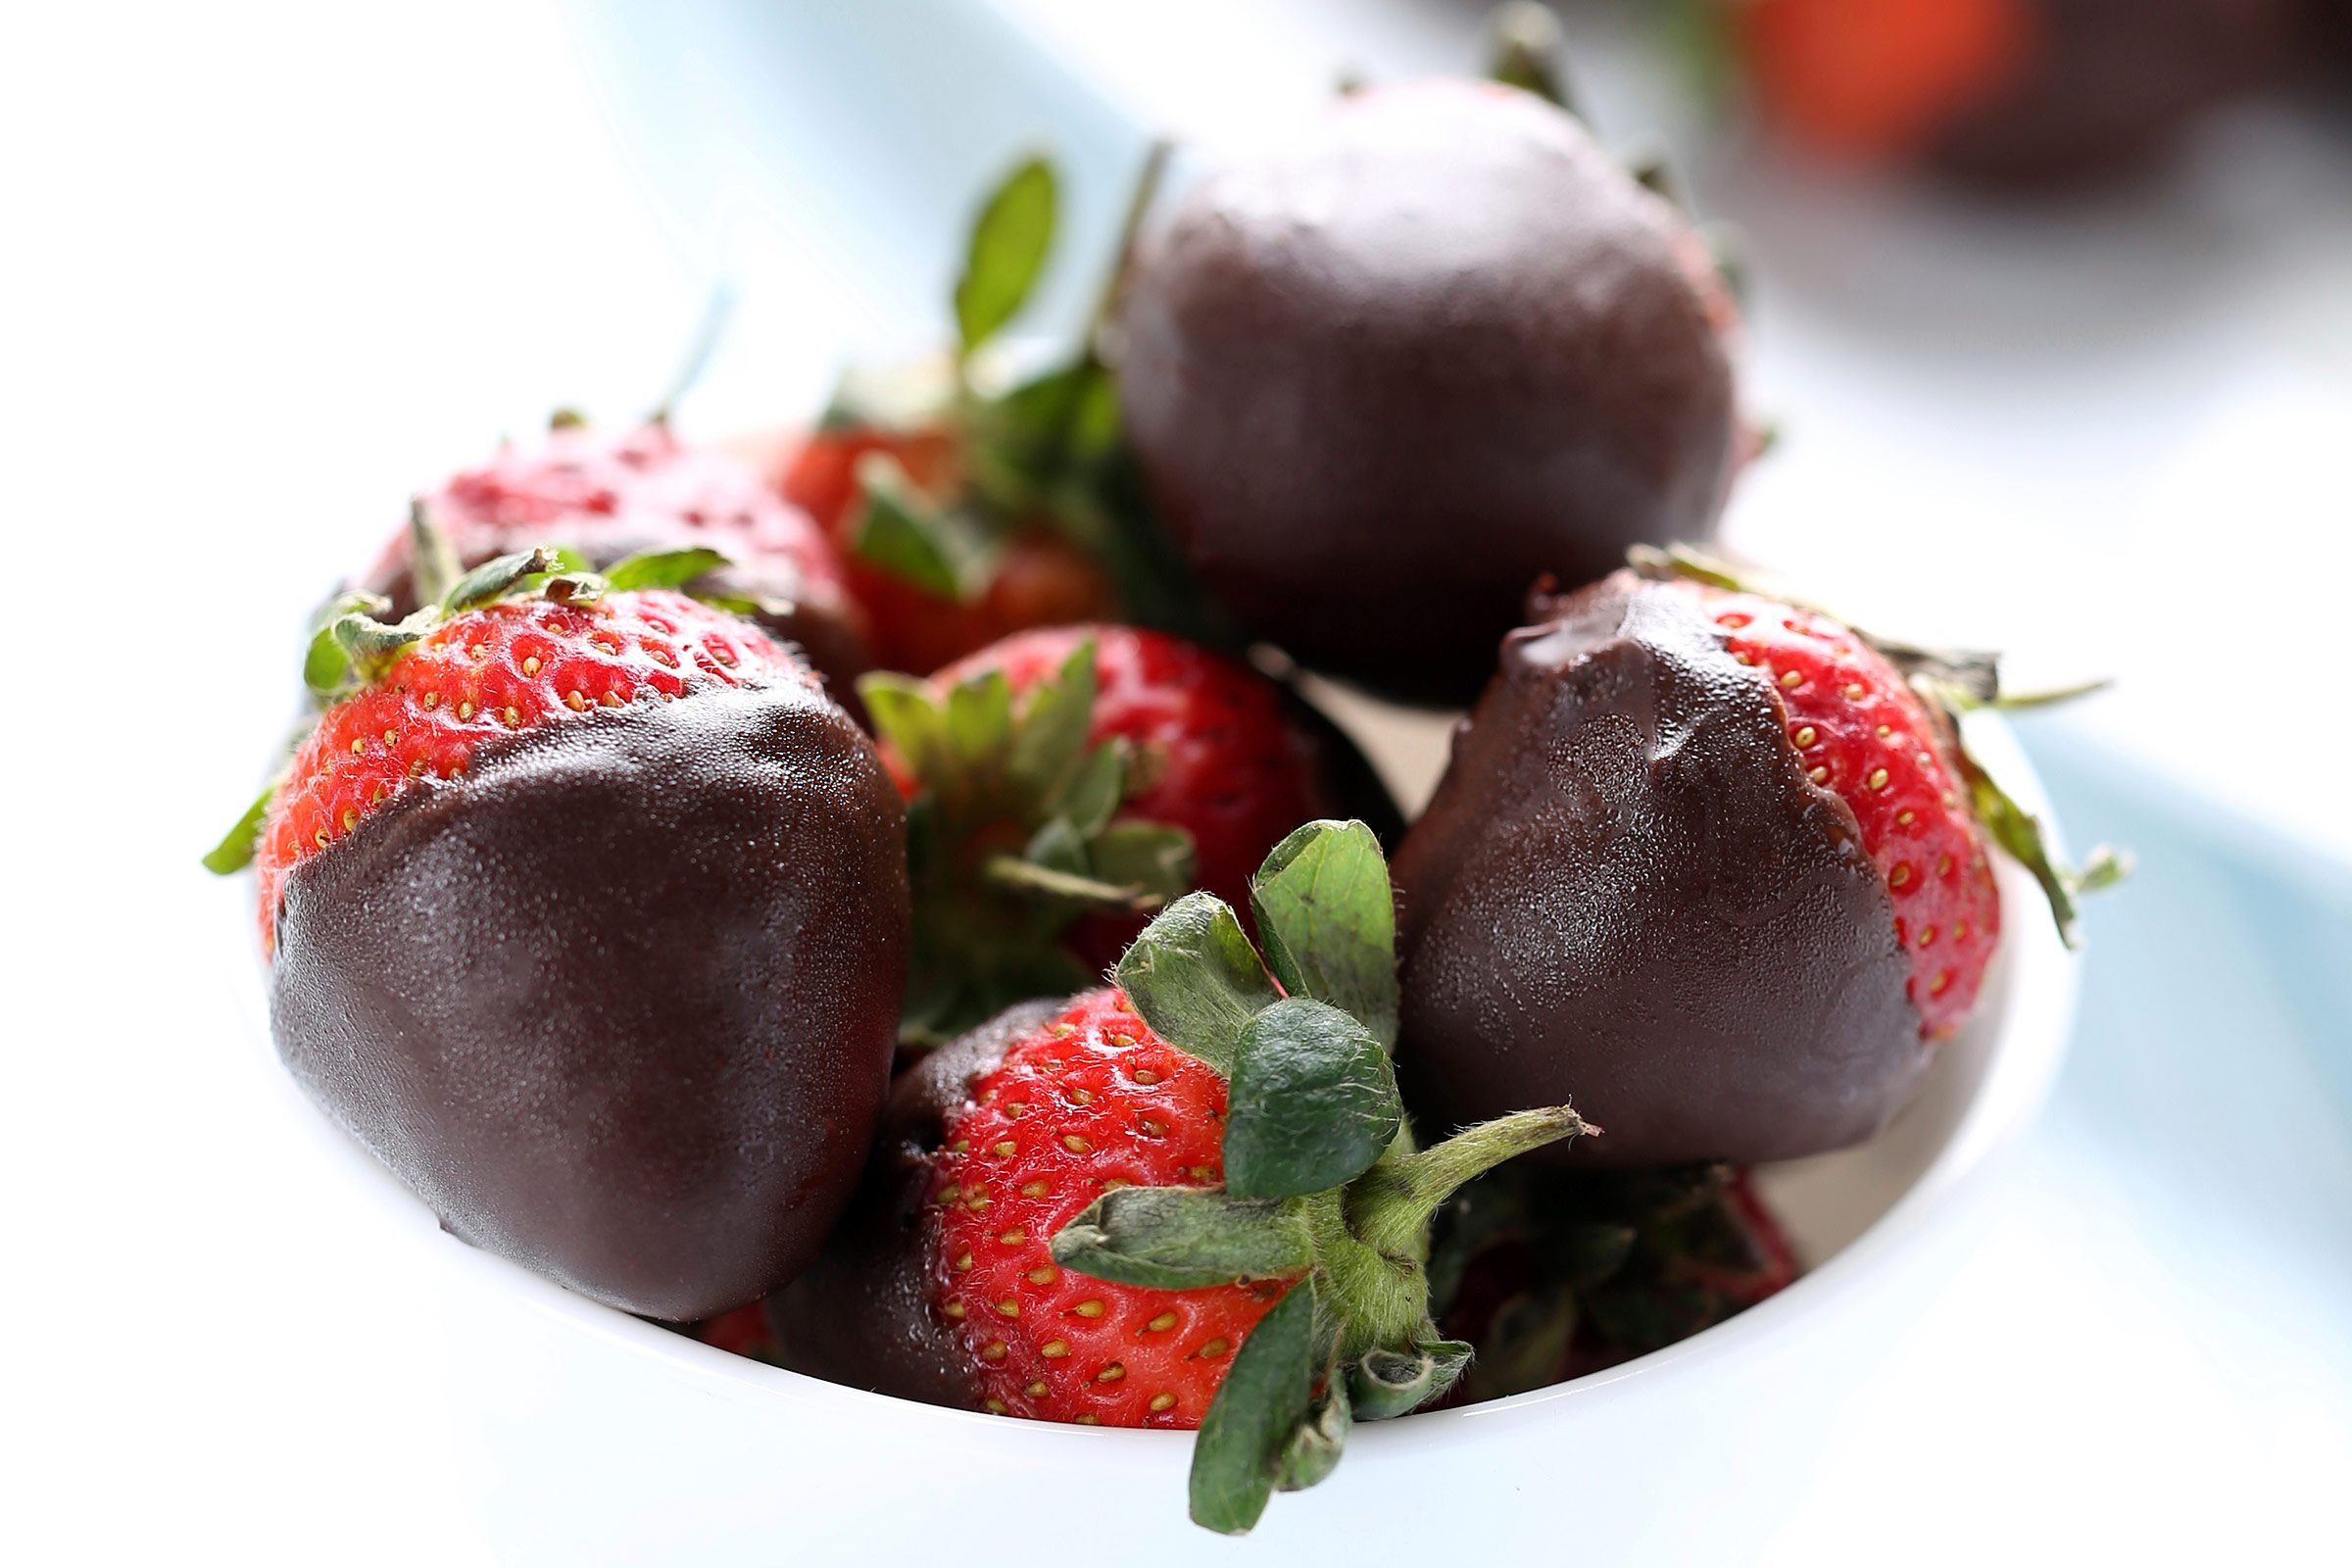 tasty healthy snacks | strawberries